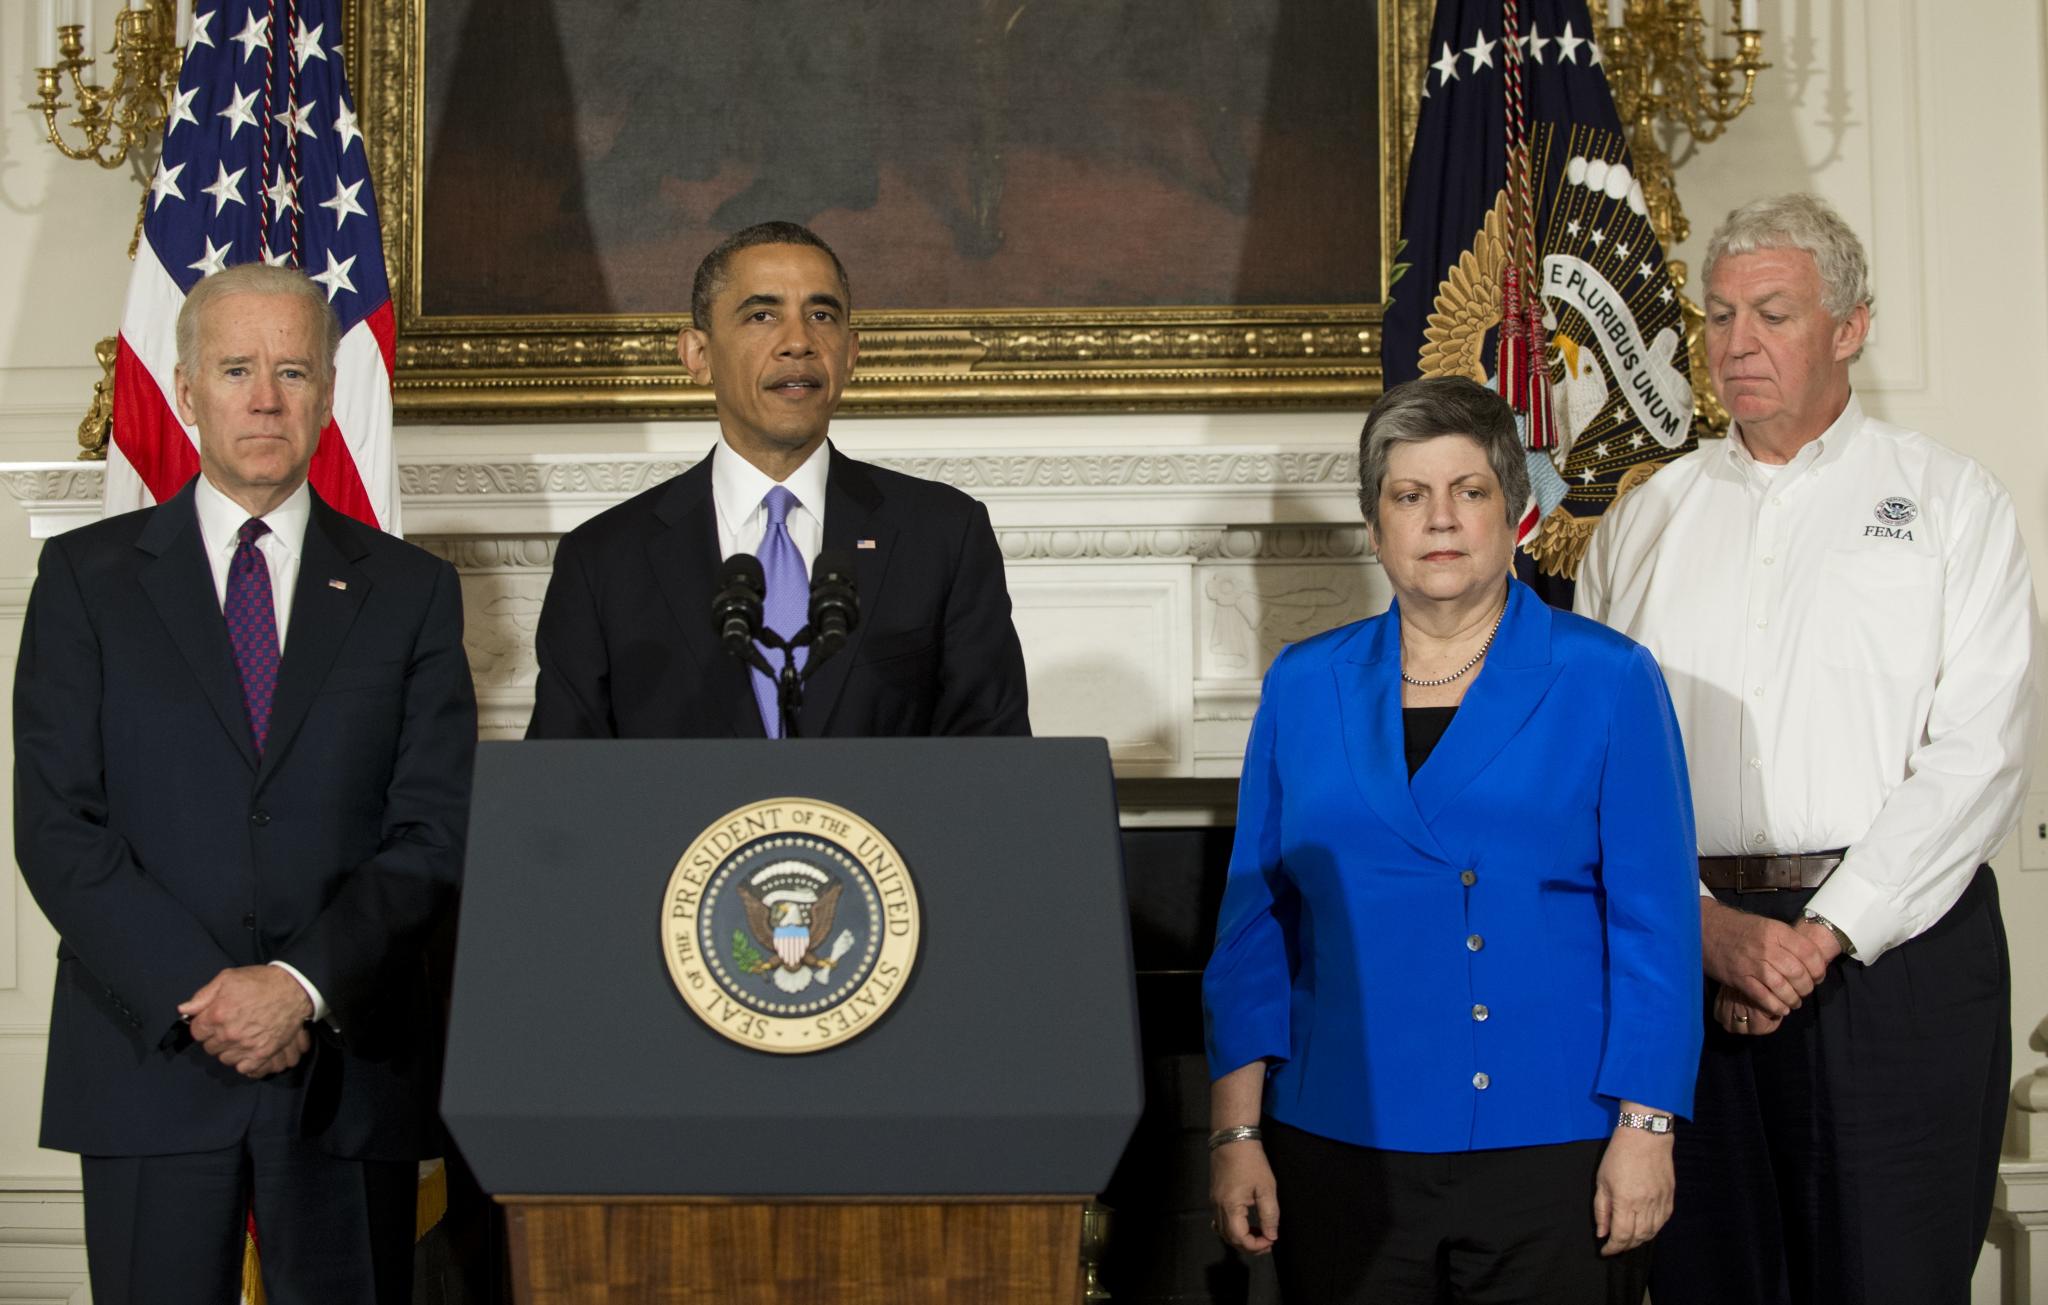 Obama Vows to Help After Oklahoma Tornados